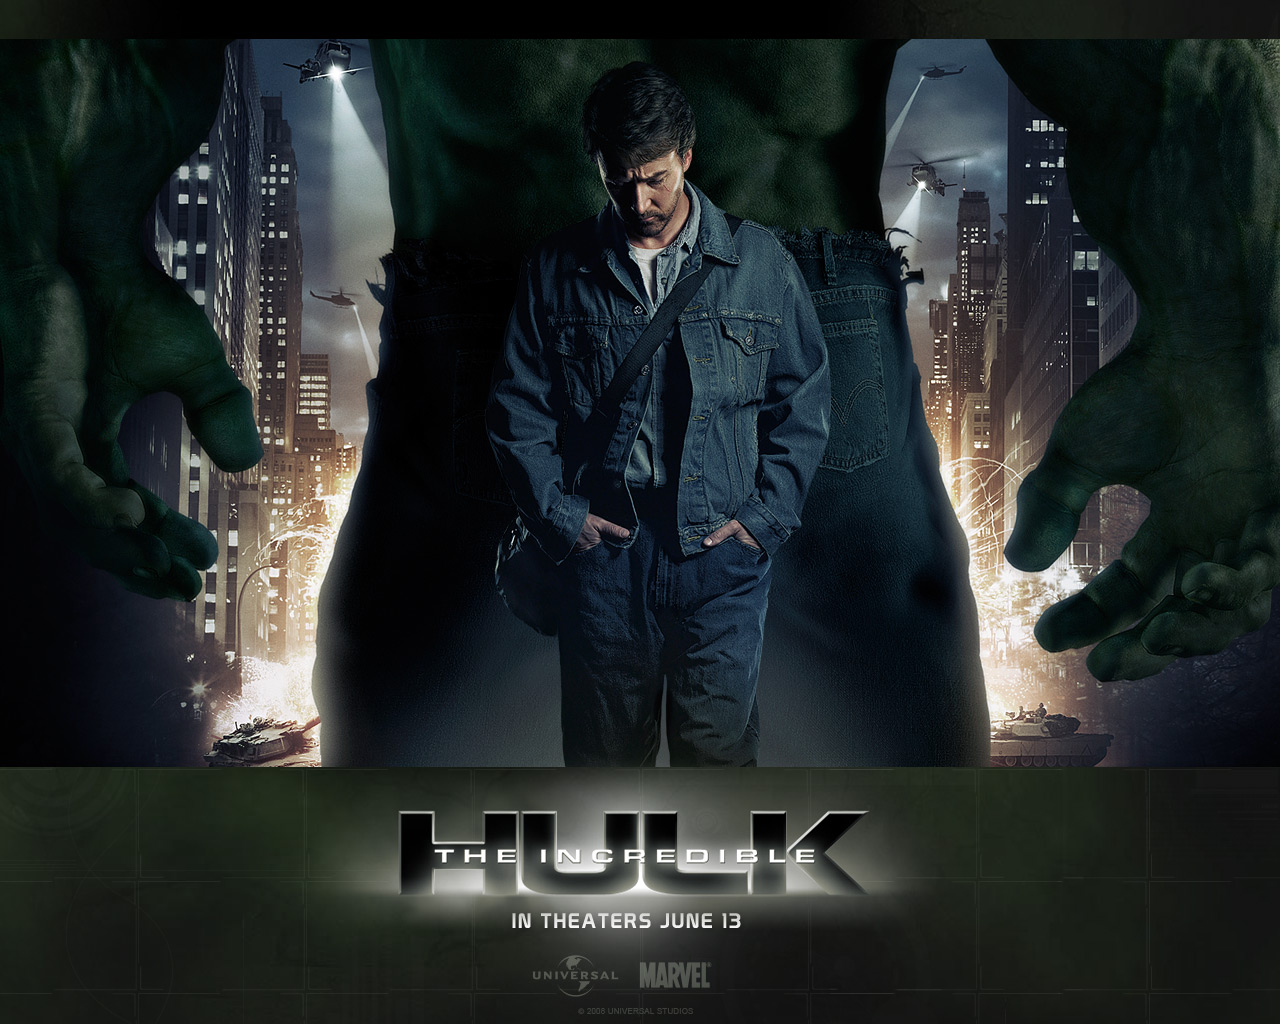 Incredible Hulk - Free desktop wallpapers download